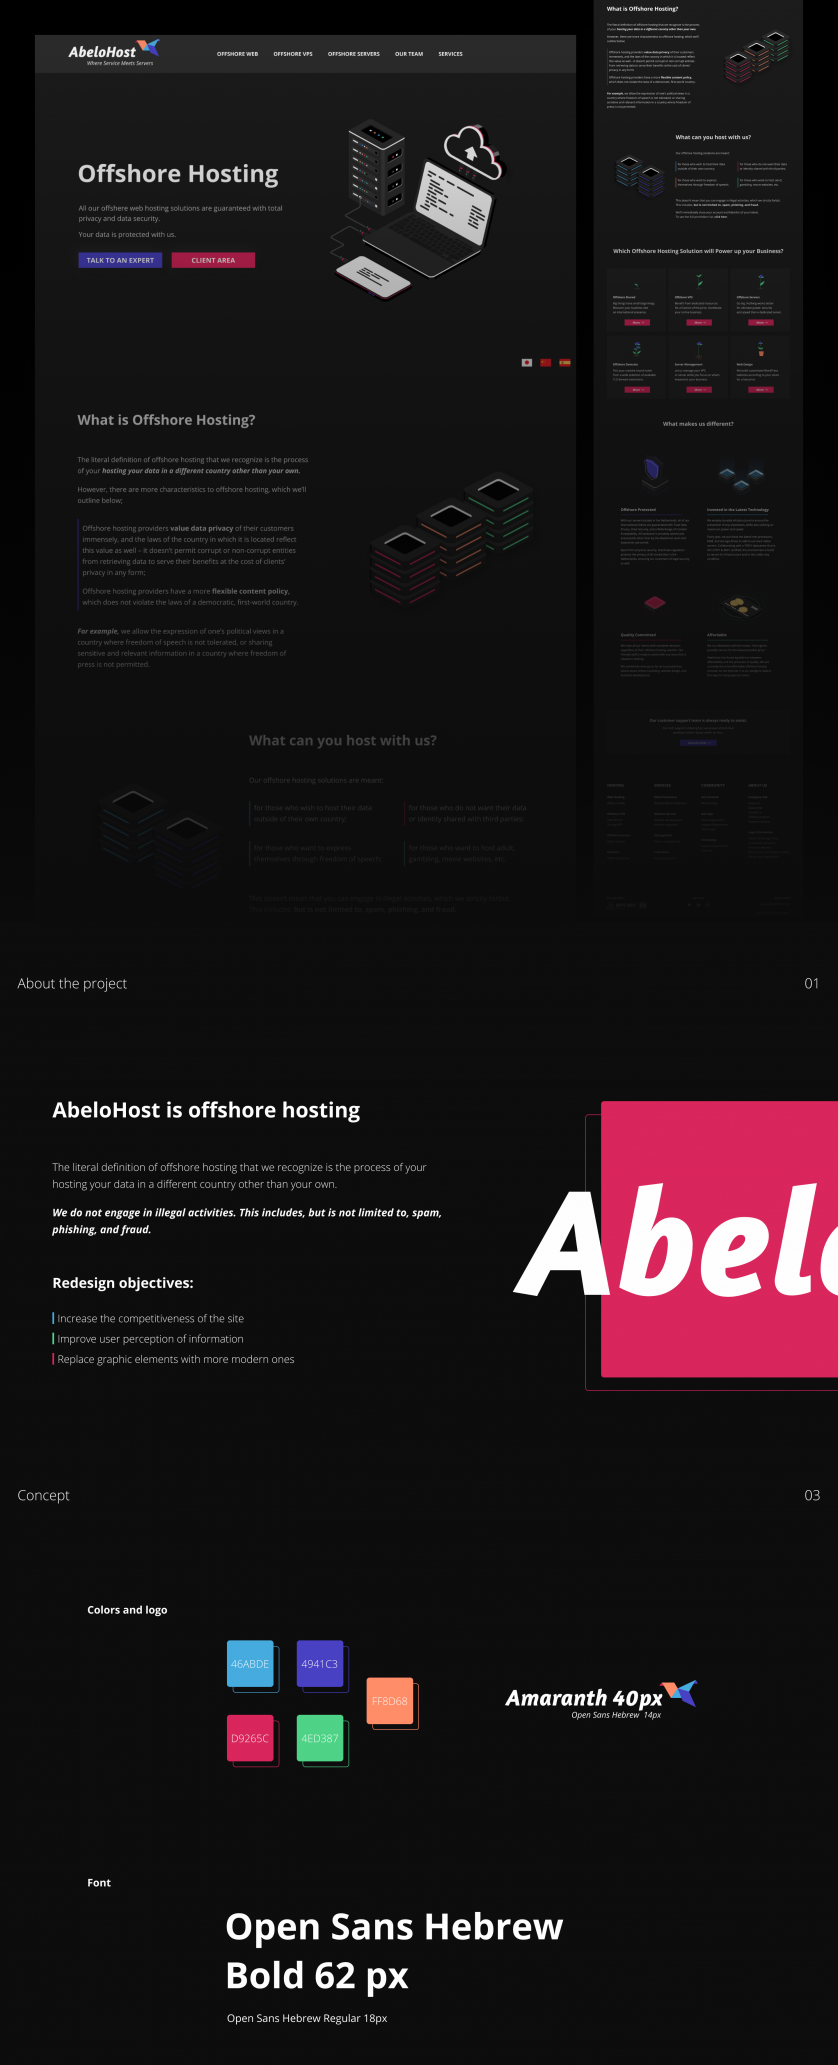 AbeloHost - redesign website image 1